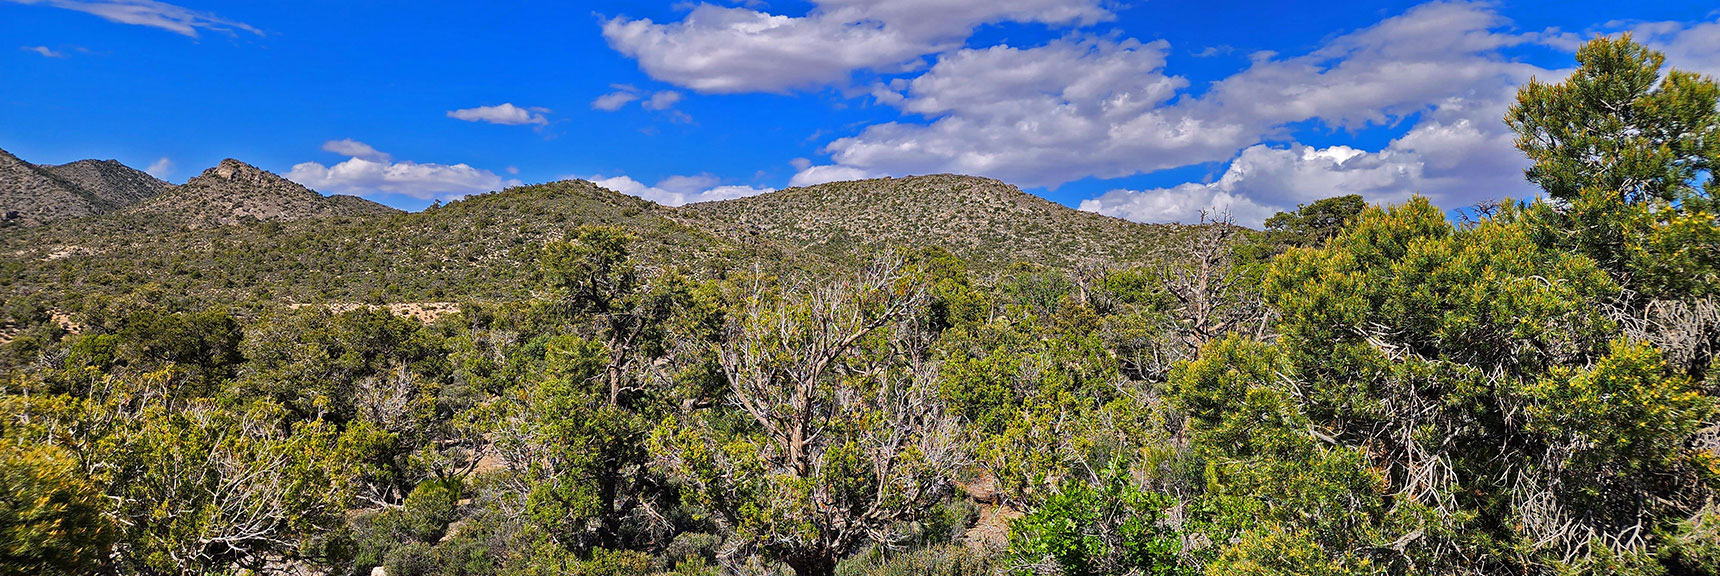 Wolverine Ridge Center Right. Will Skirt North Side of Ridge. | Little Zion | Rainbow Mountain Wilderness, Nevada